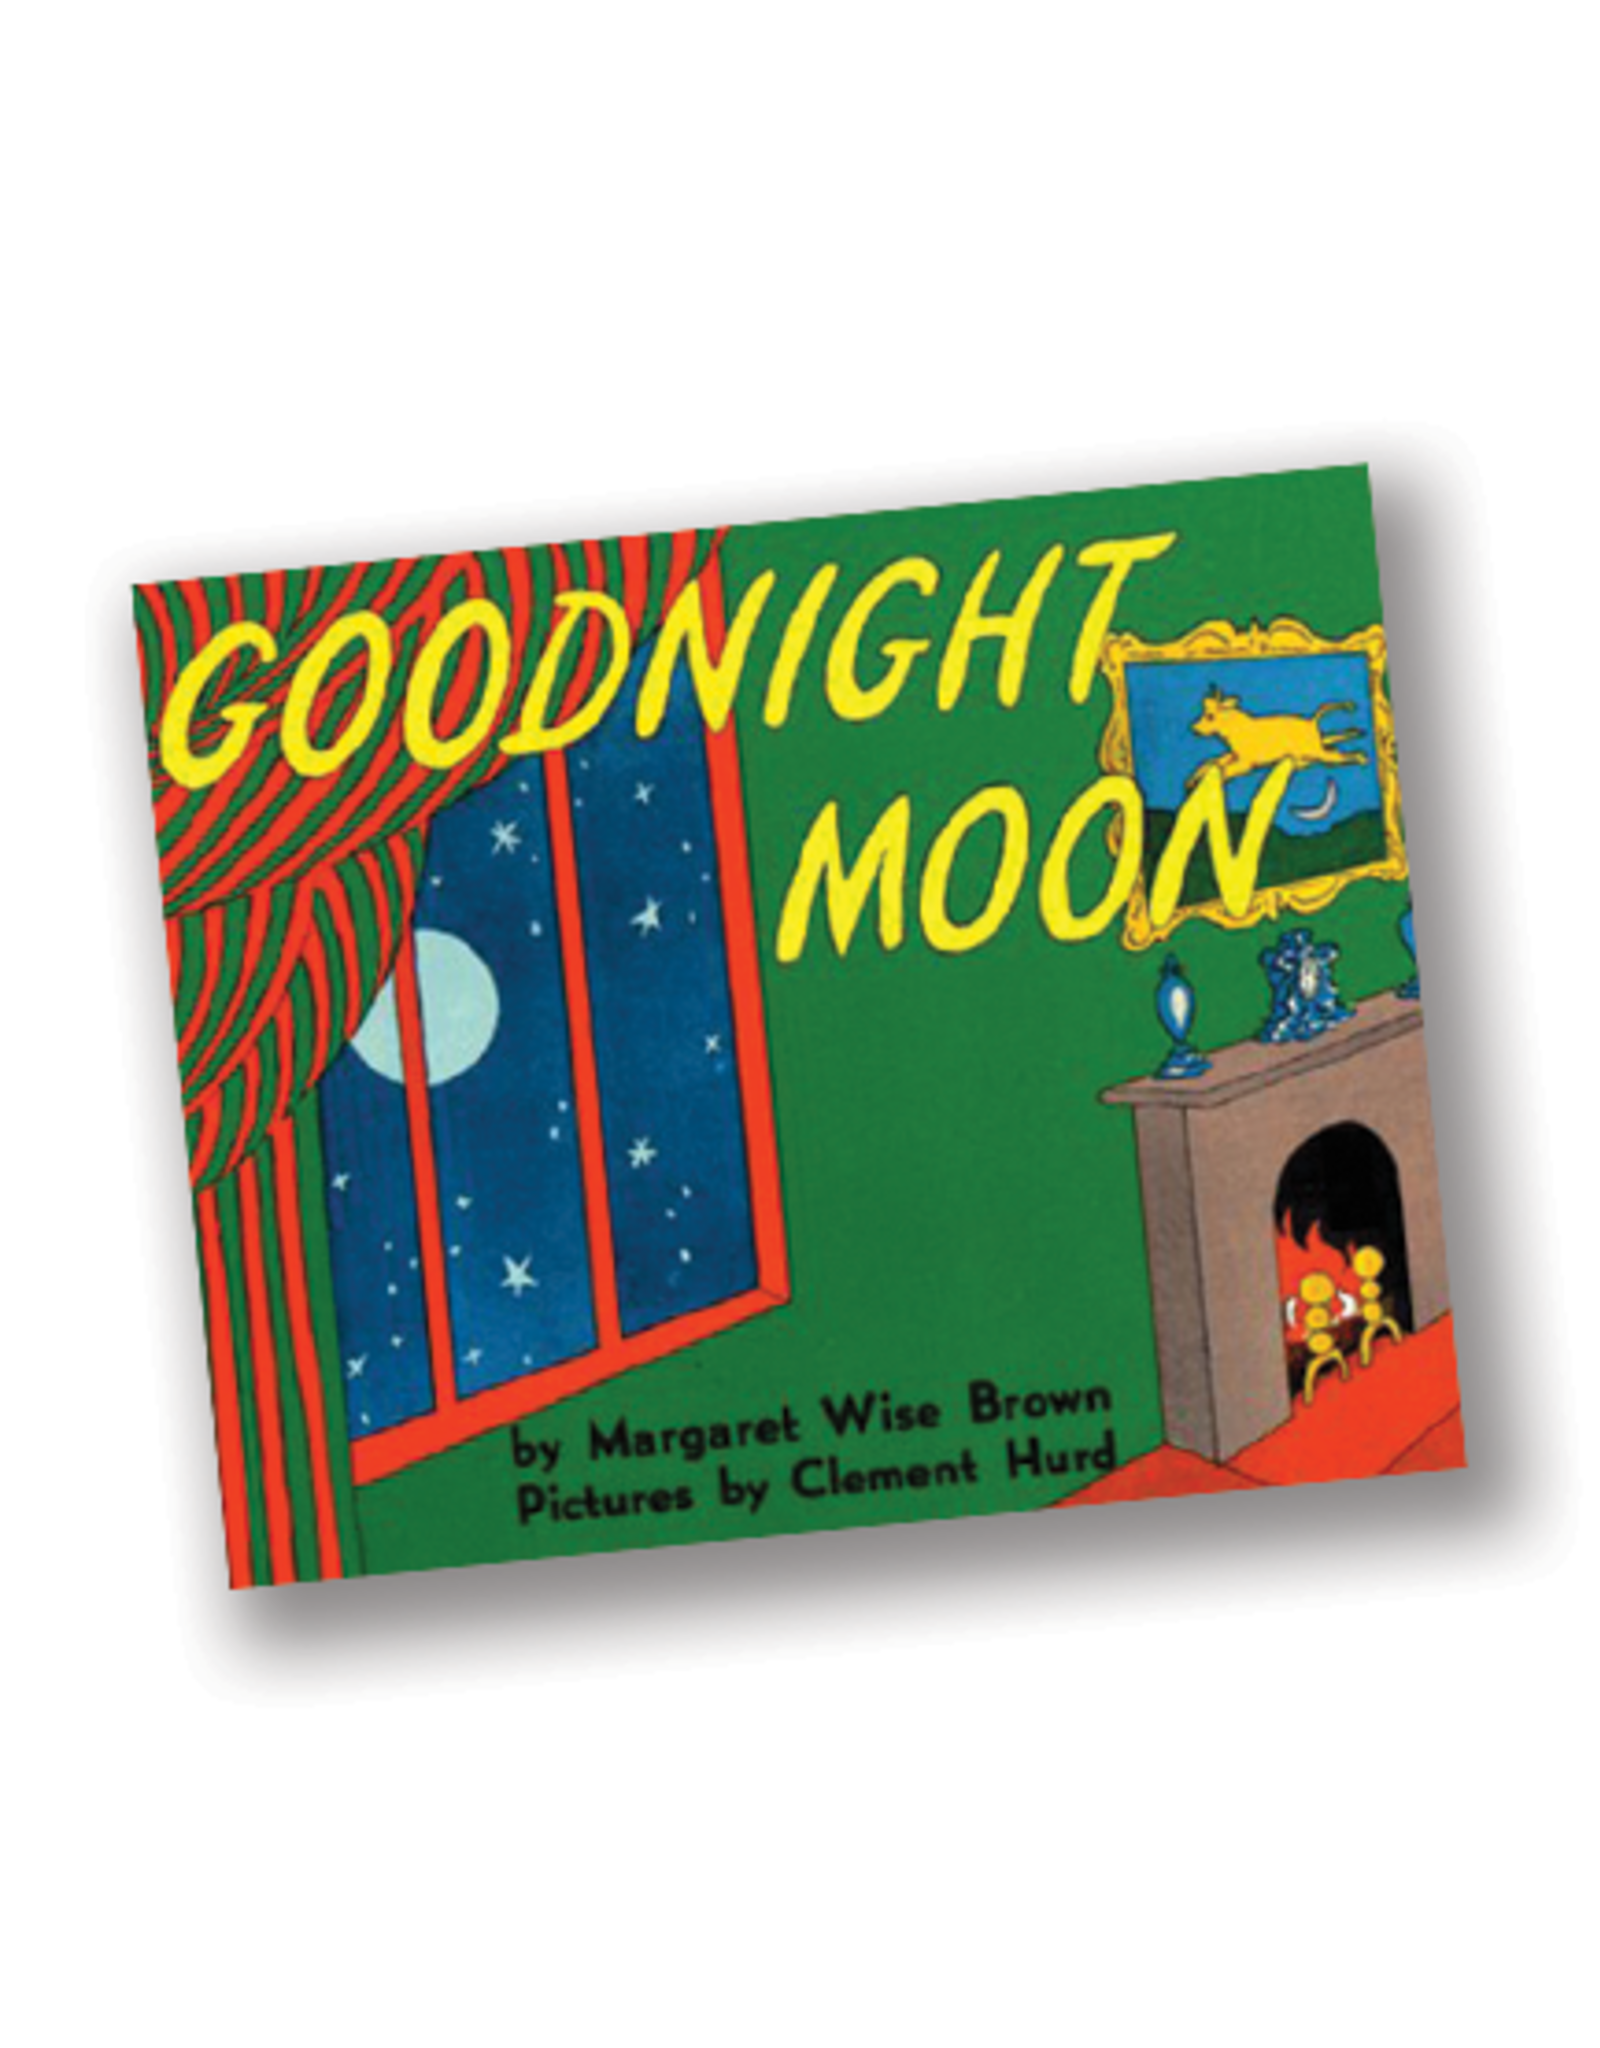 Goodnight Moon (board book)